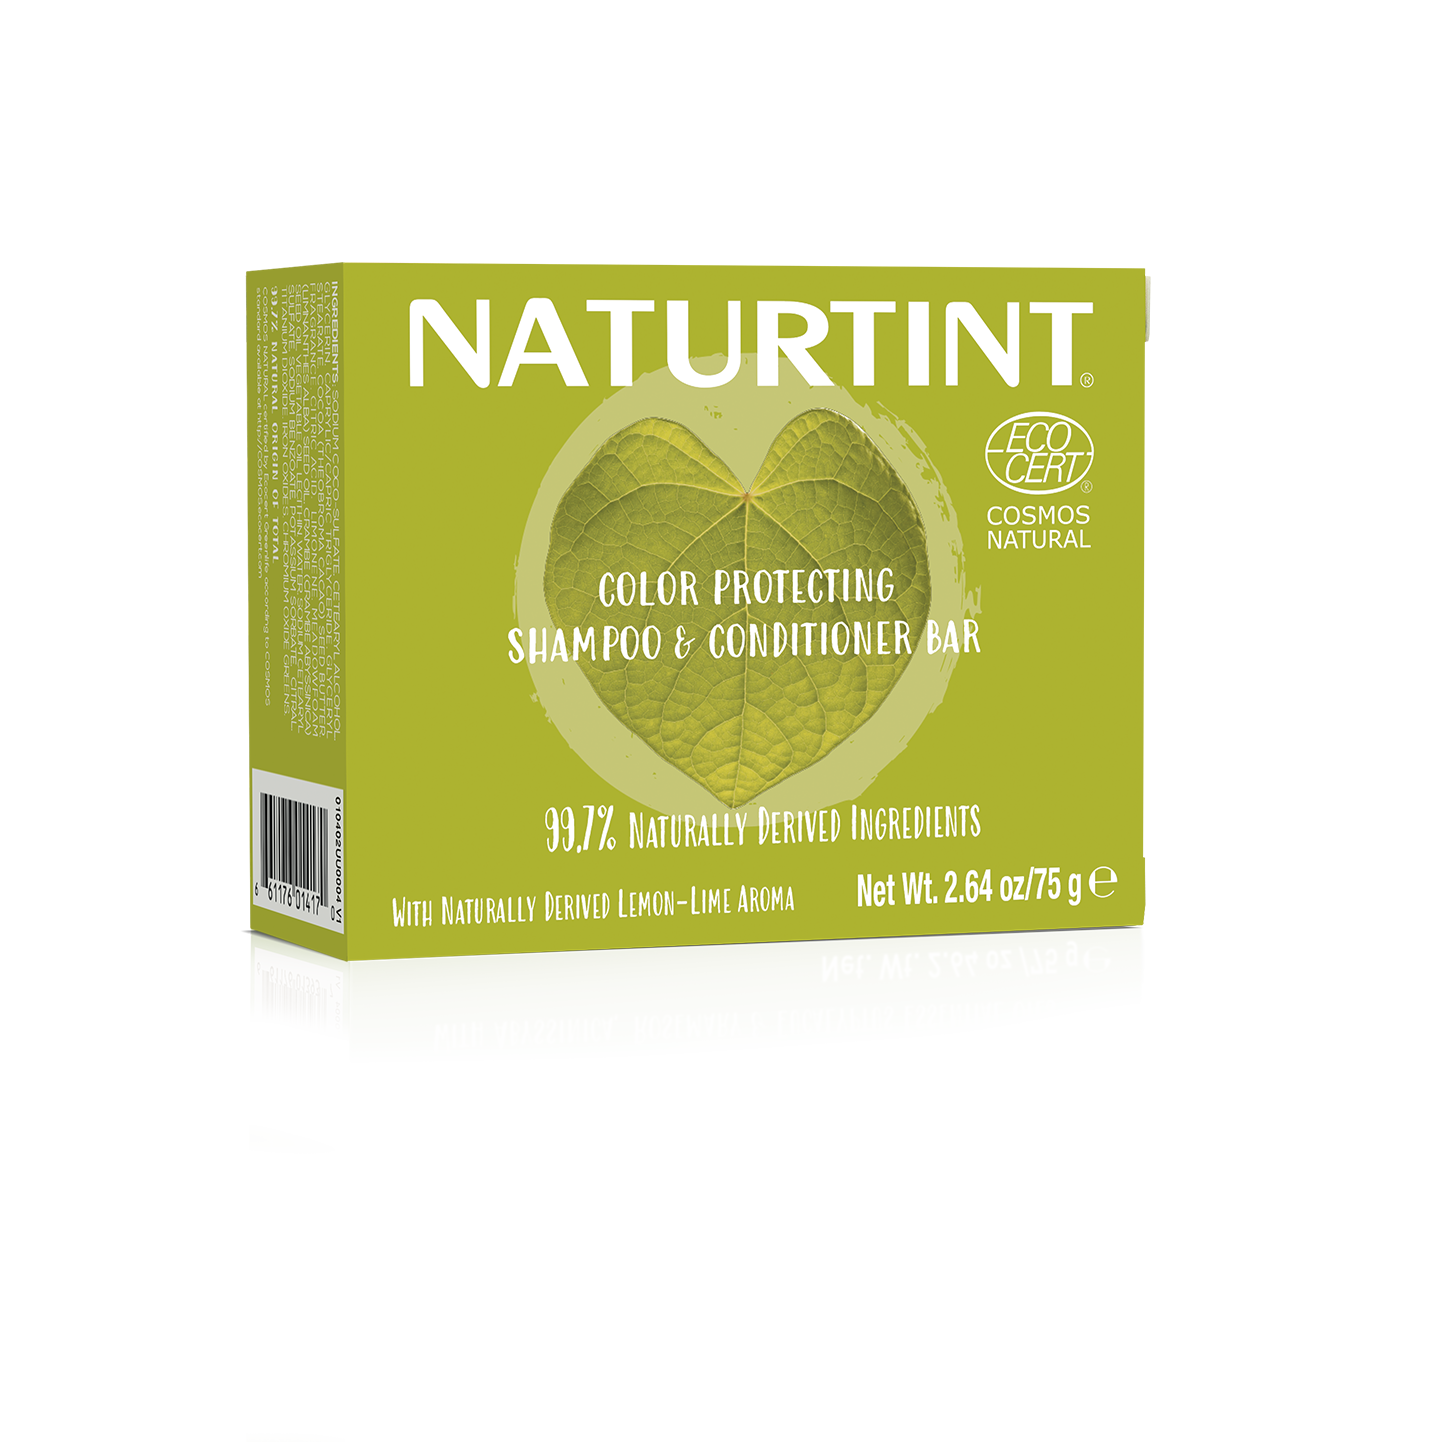 Naturtint Shampoo & Conditioner Bar - Color Protecting Lemon Lime